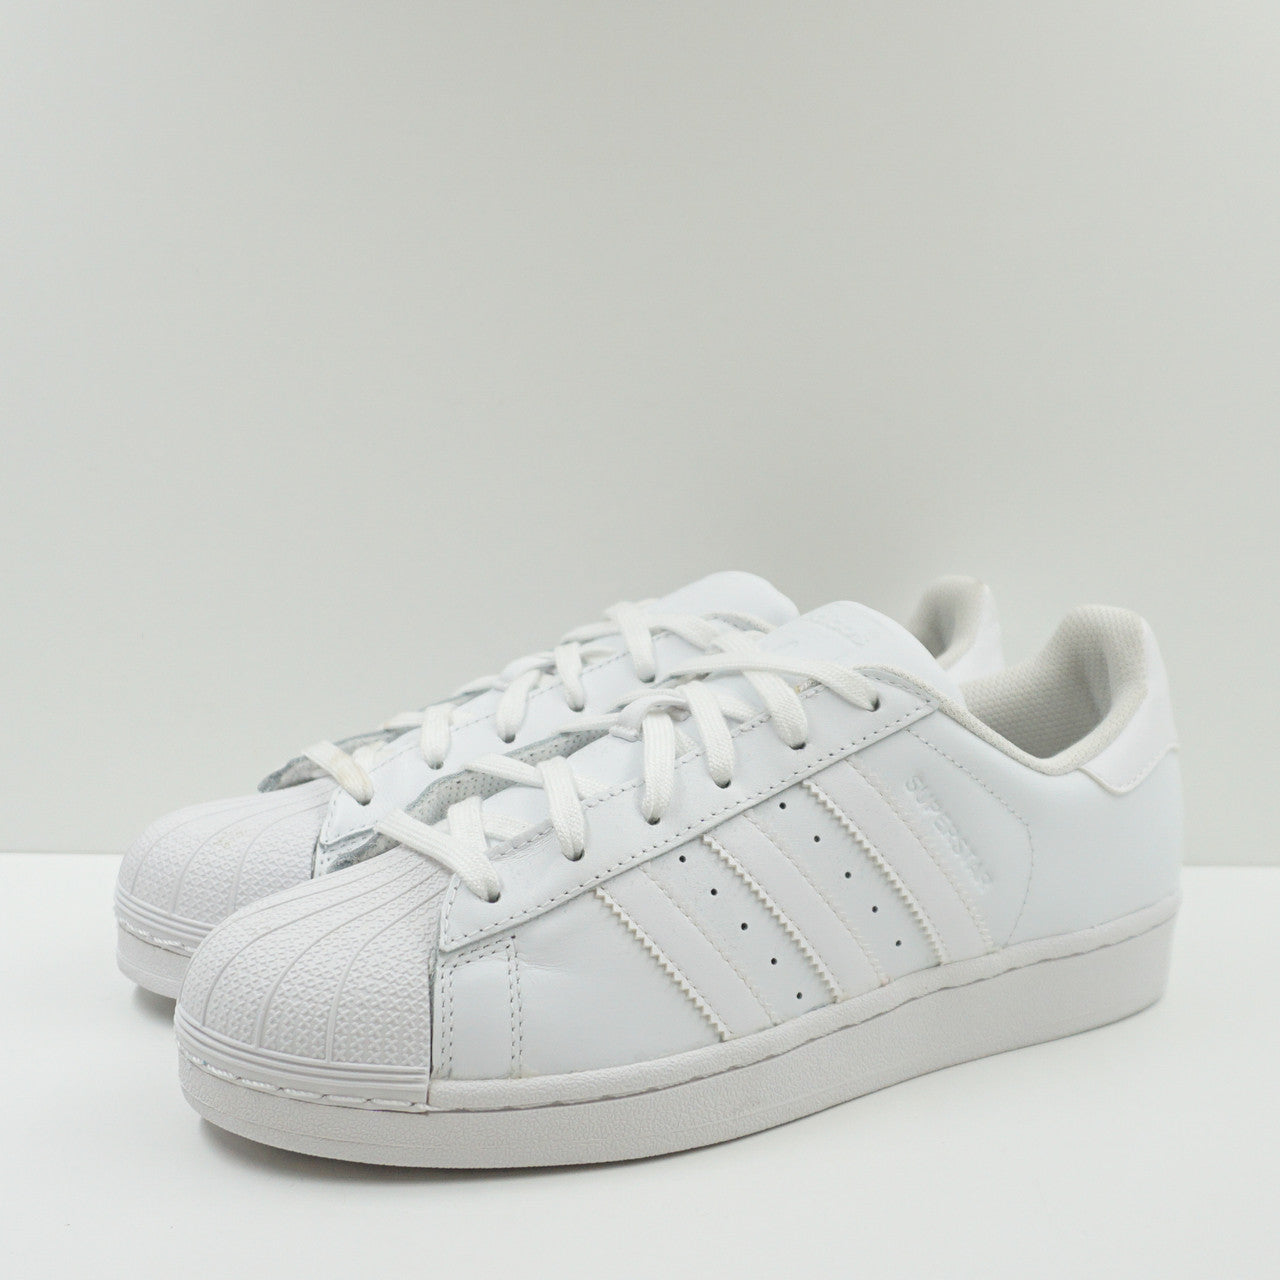 Adidas Superstar Foundation White/White